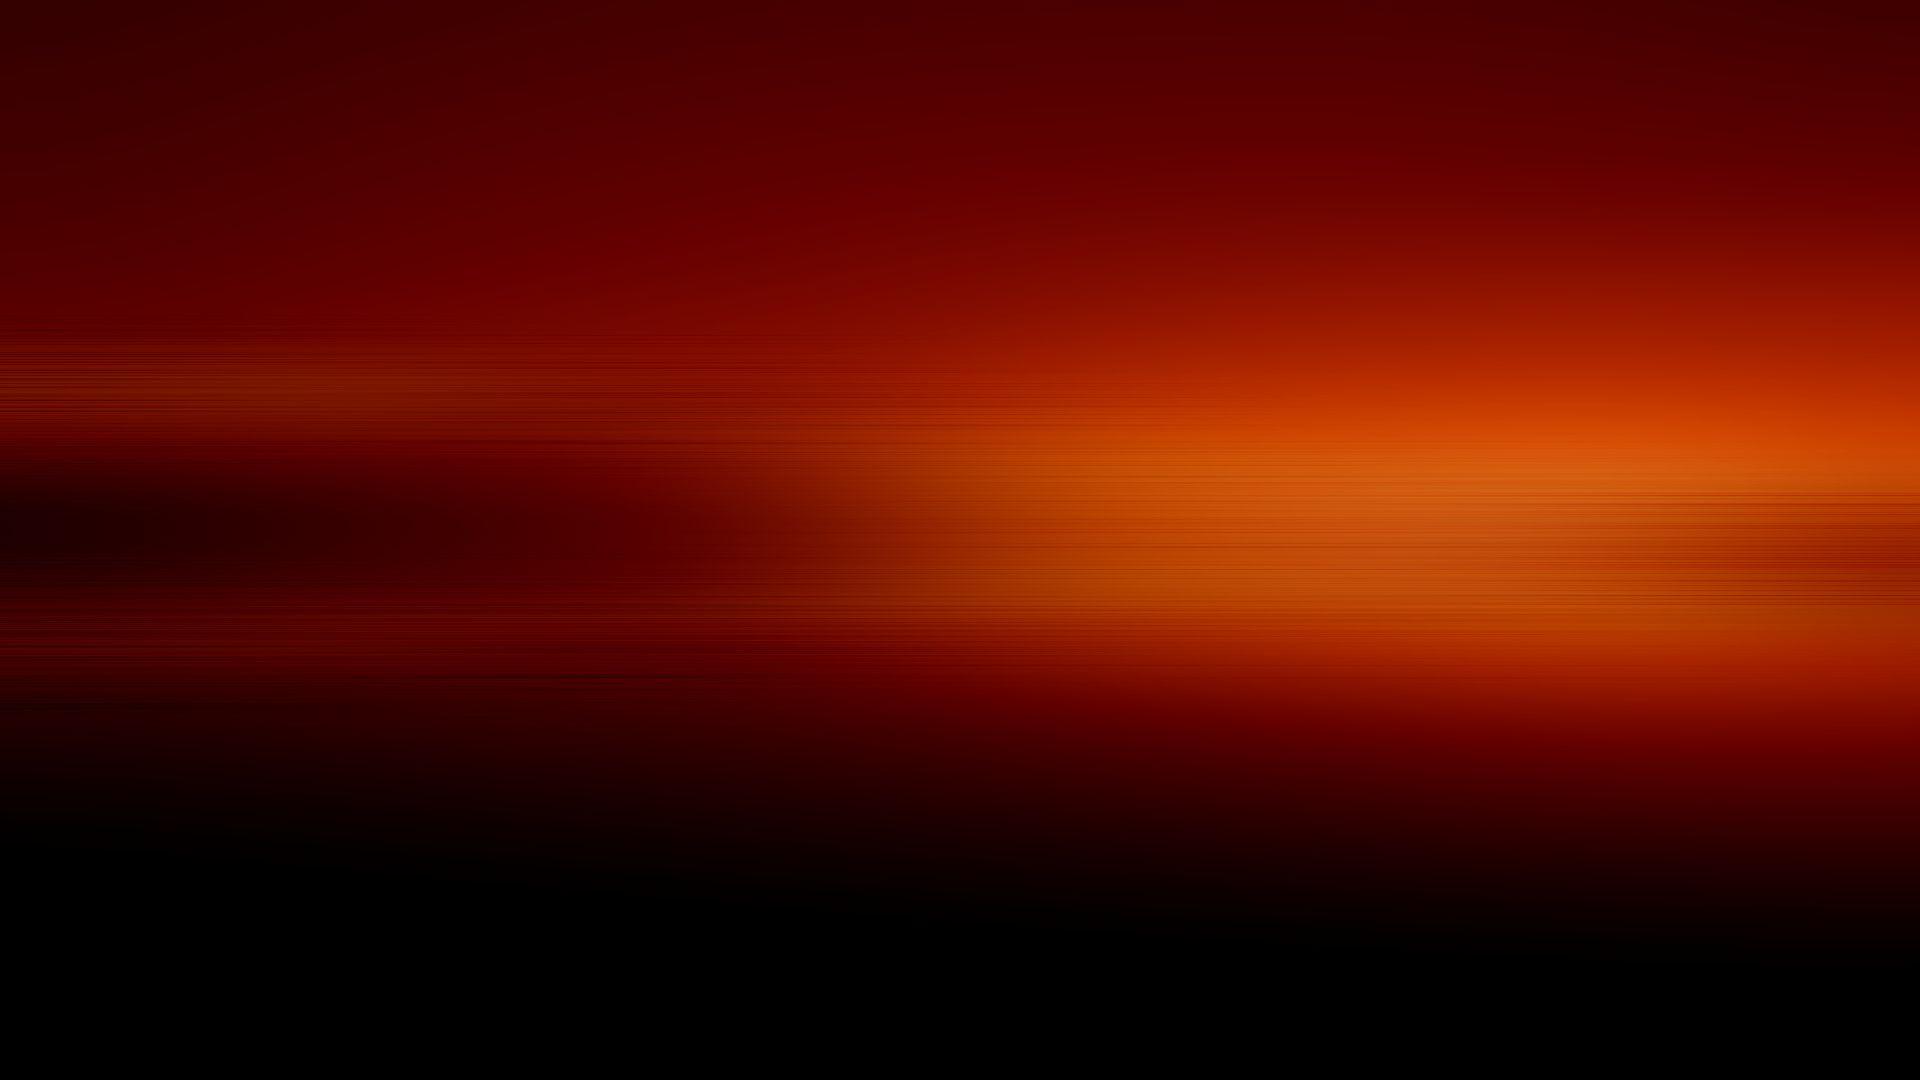 red orange plain background